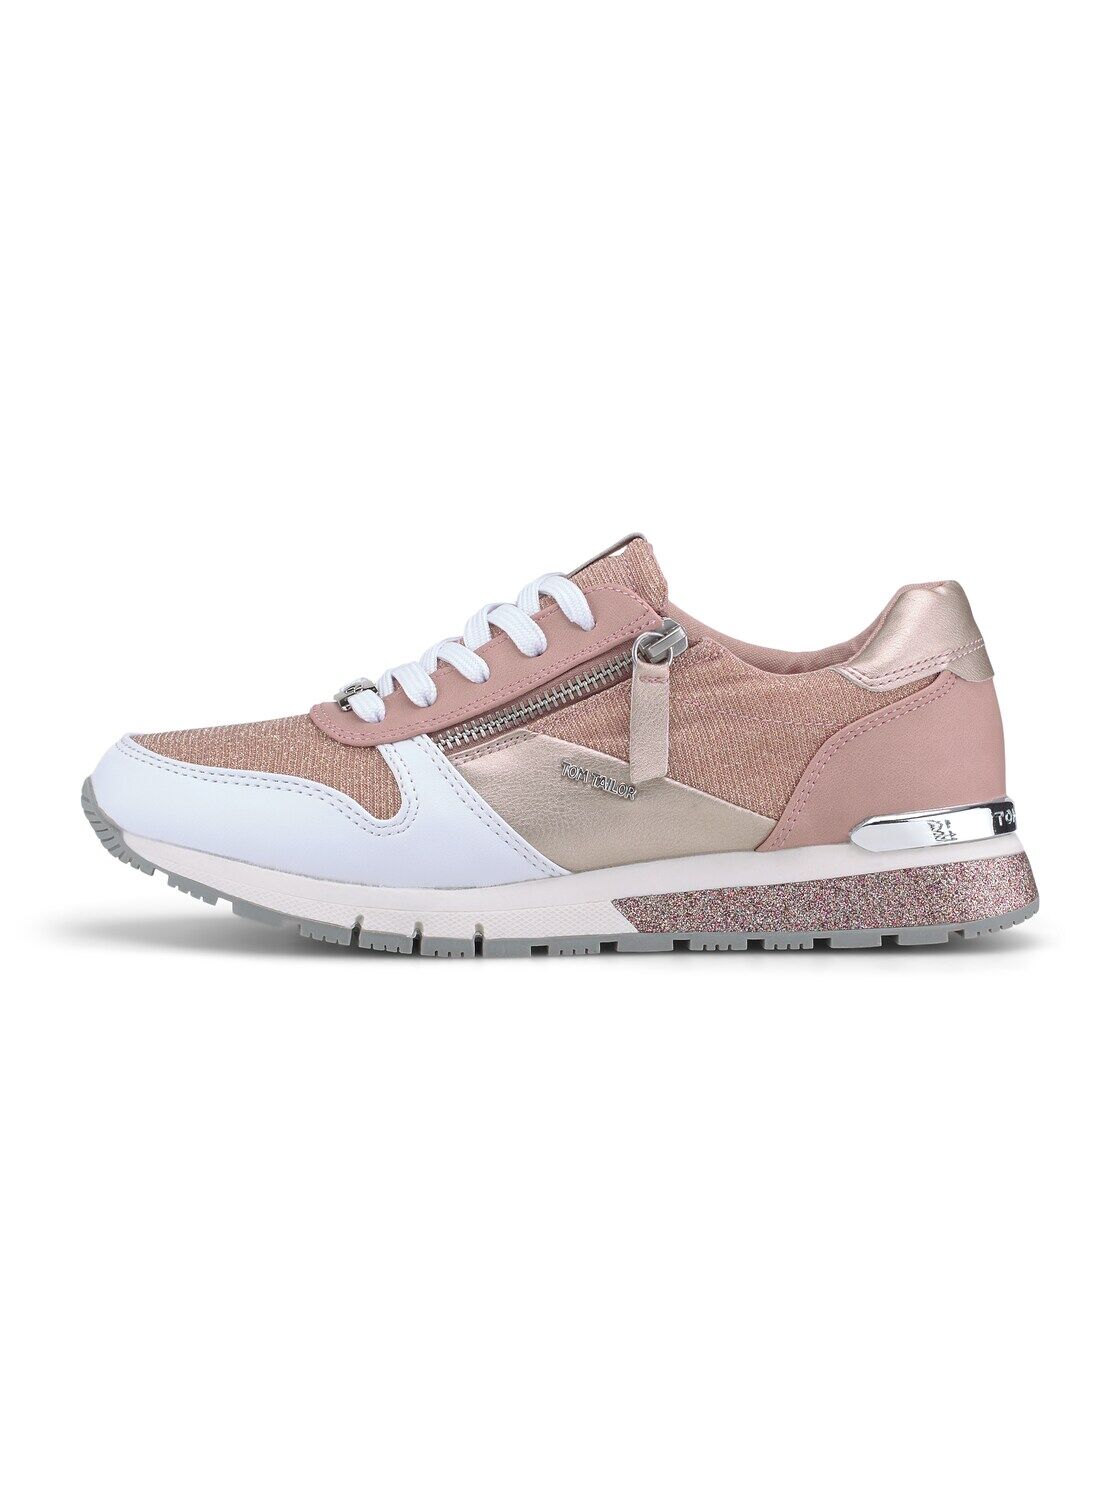 TOM TAILOR Damen Sneaker mit Reißverschluss-Details, rosa, Gr.39